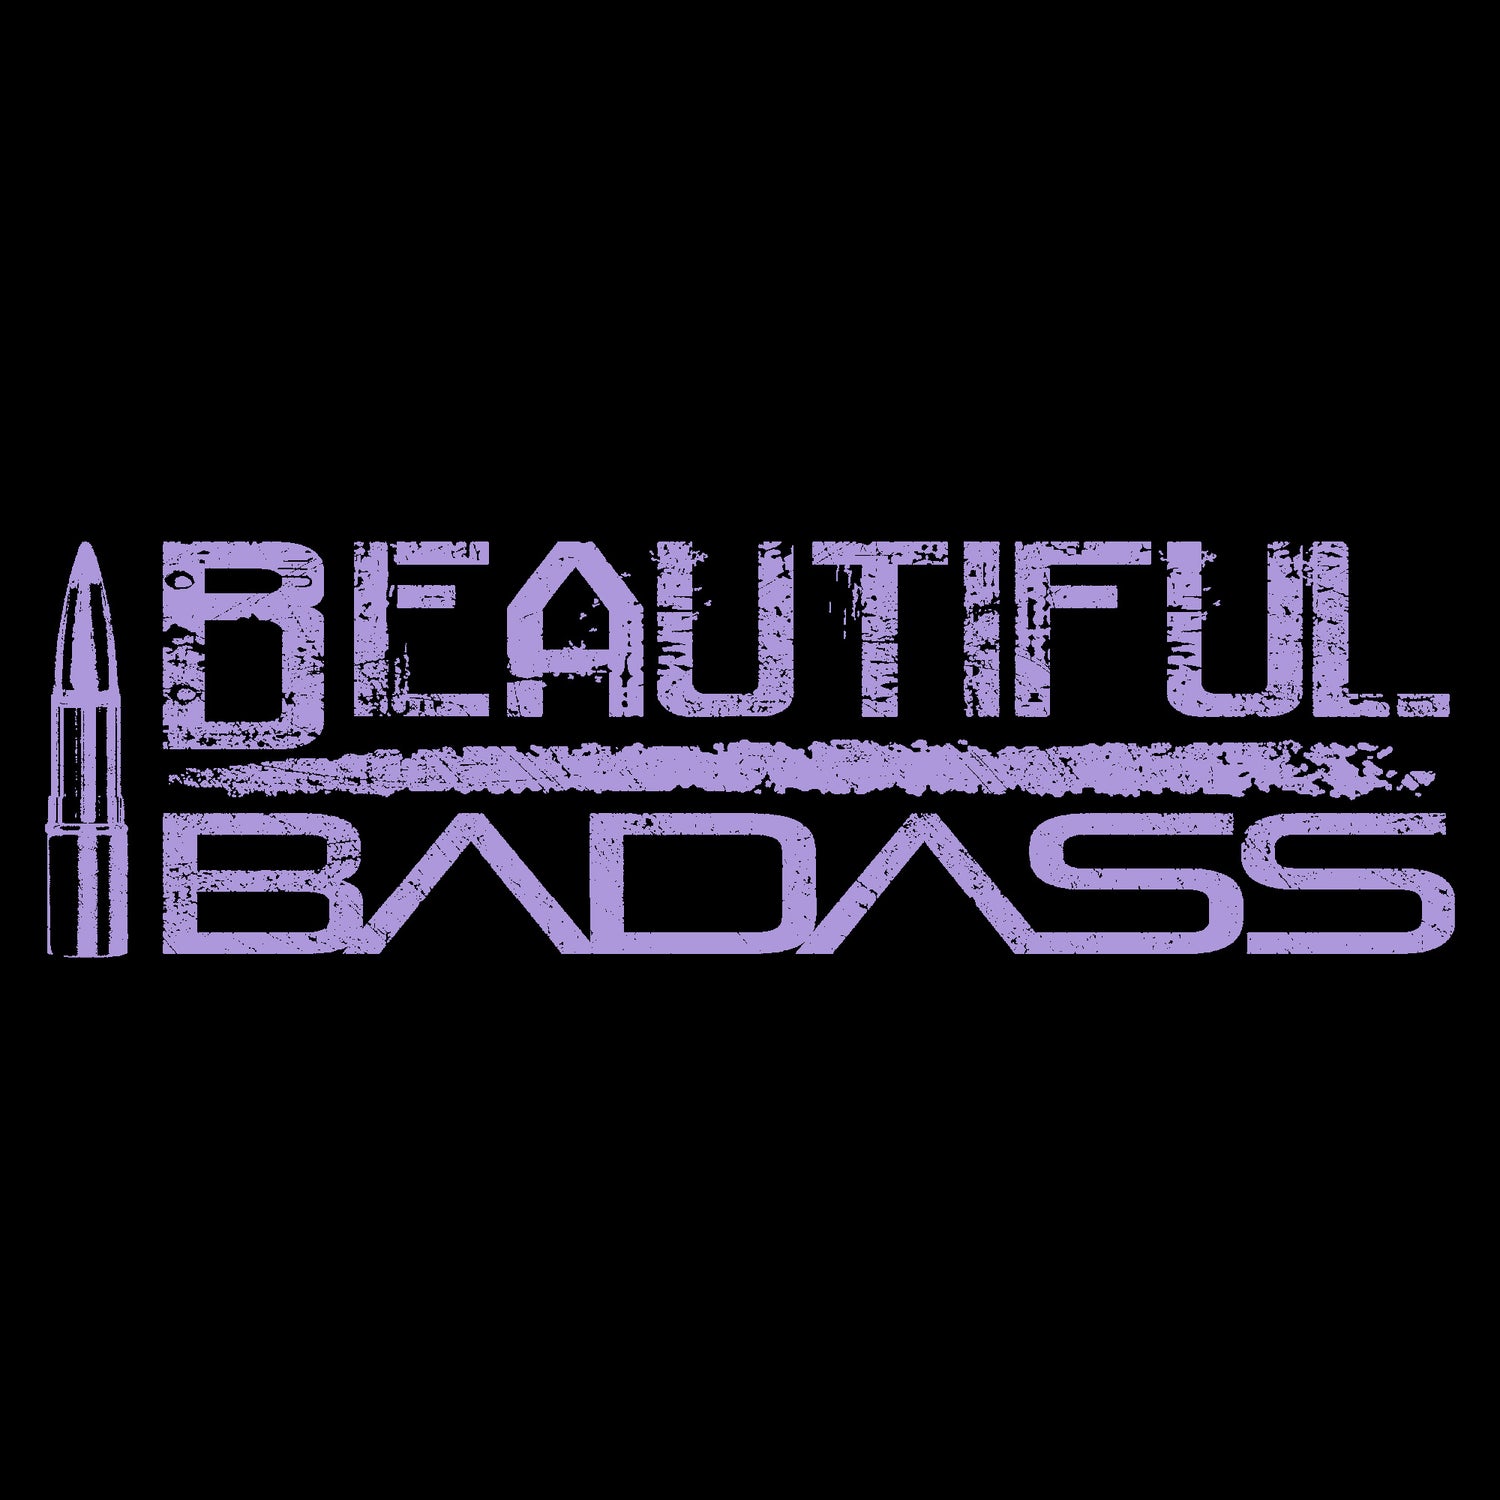  Beautiful Badass  | Grunt Style  